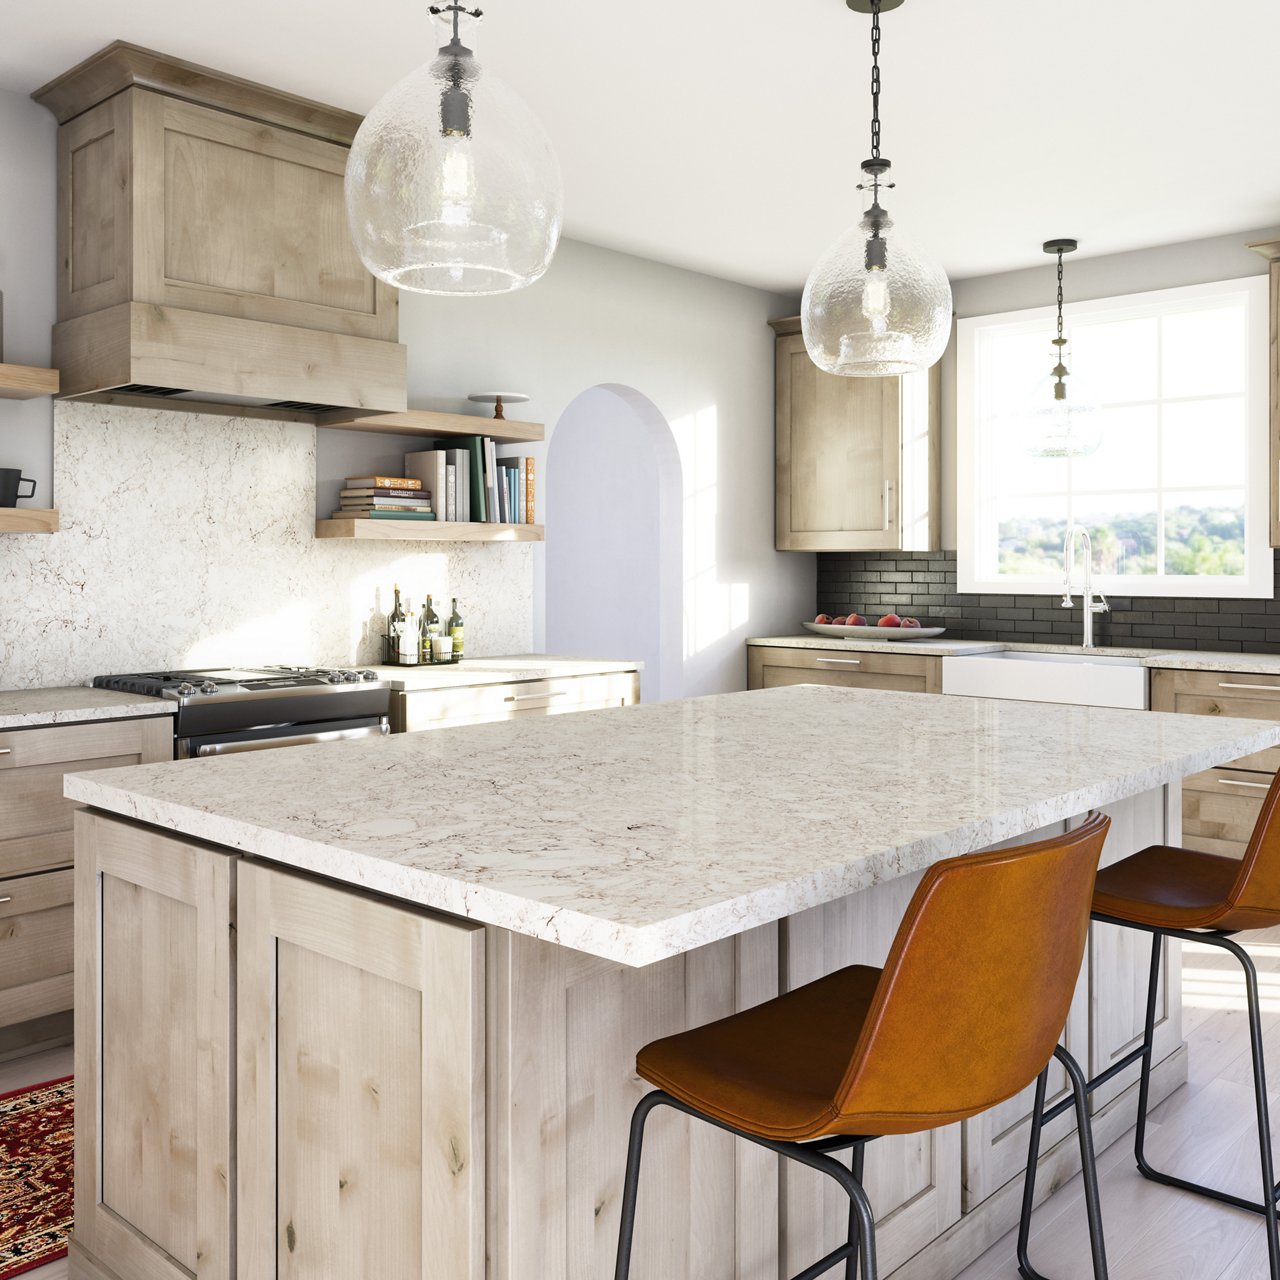 Haydon quartz countertop and backsplash in a light toned kitchen